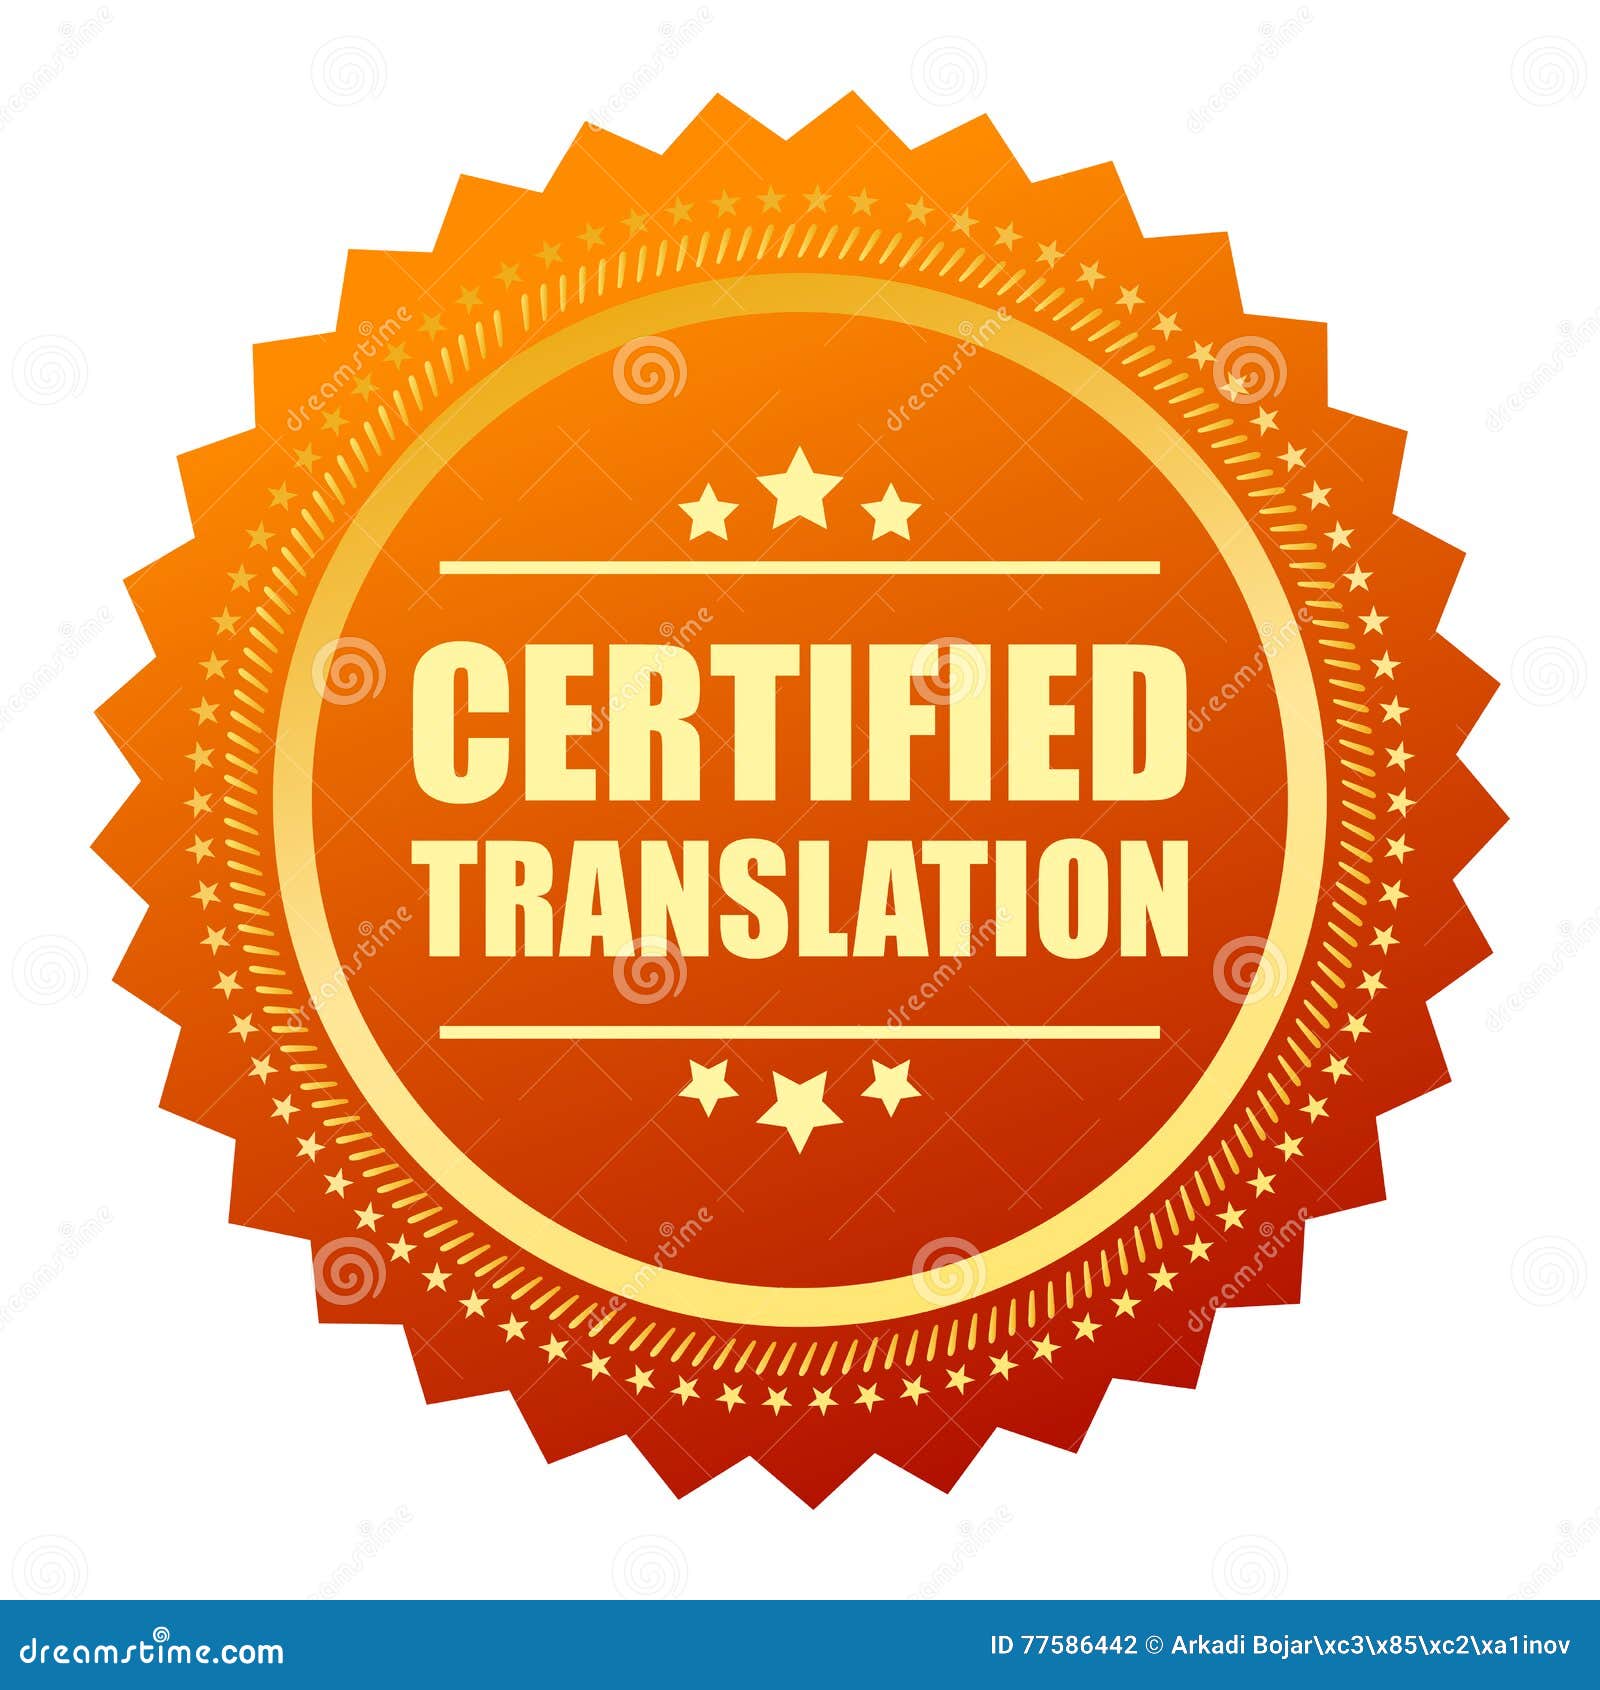 certified translation gold seal